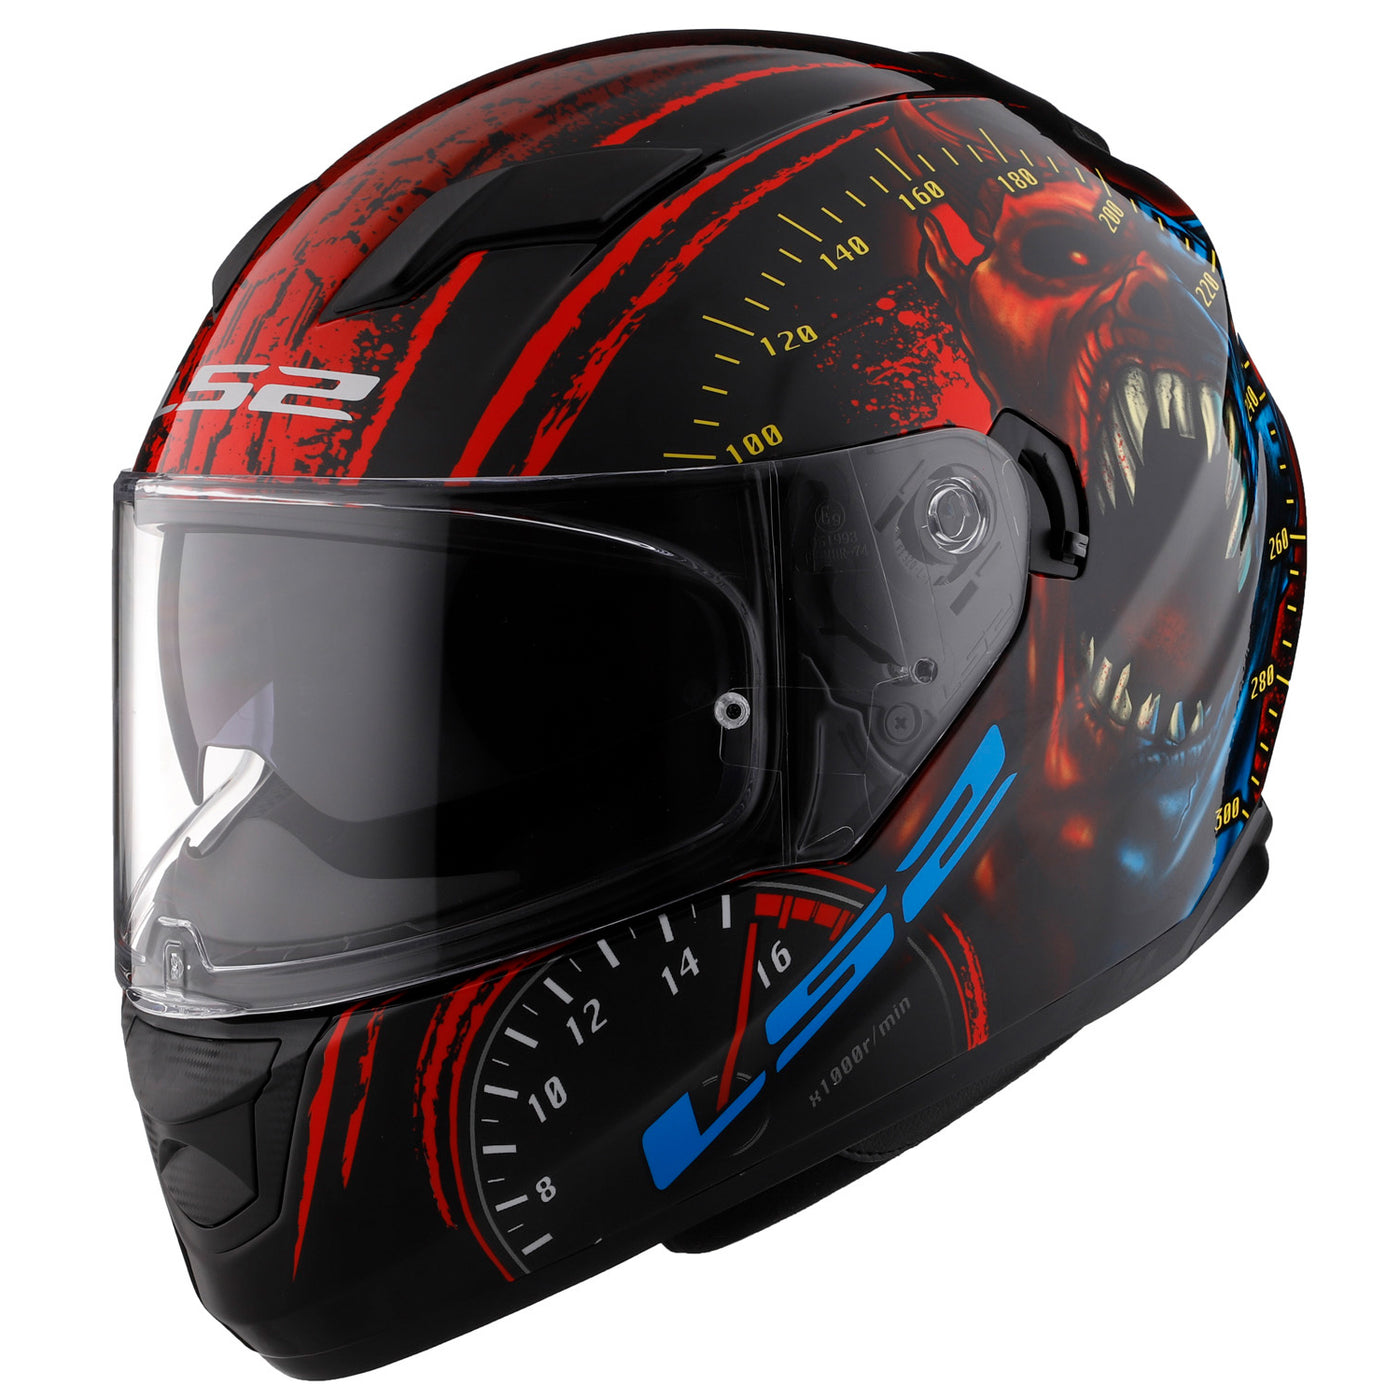 LS2 Helmets Stream Speed Demon Motorcycle Full Face Helmet